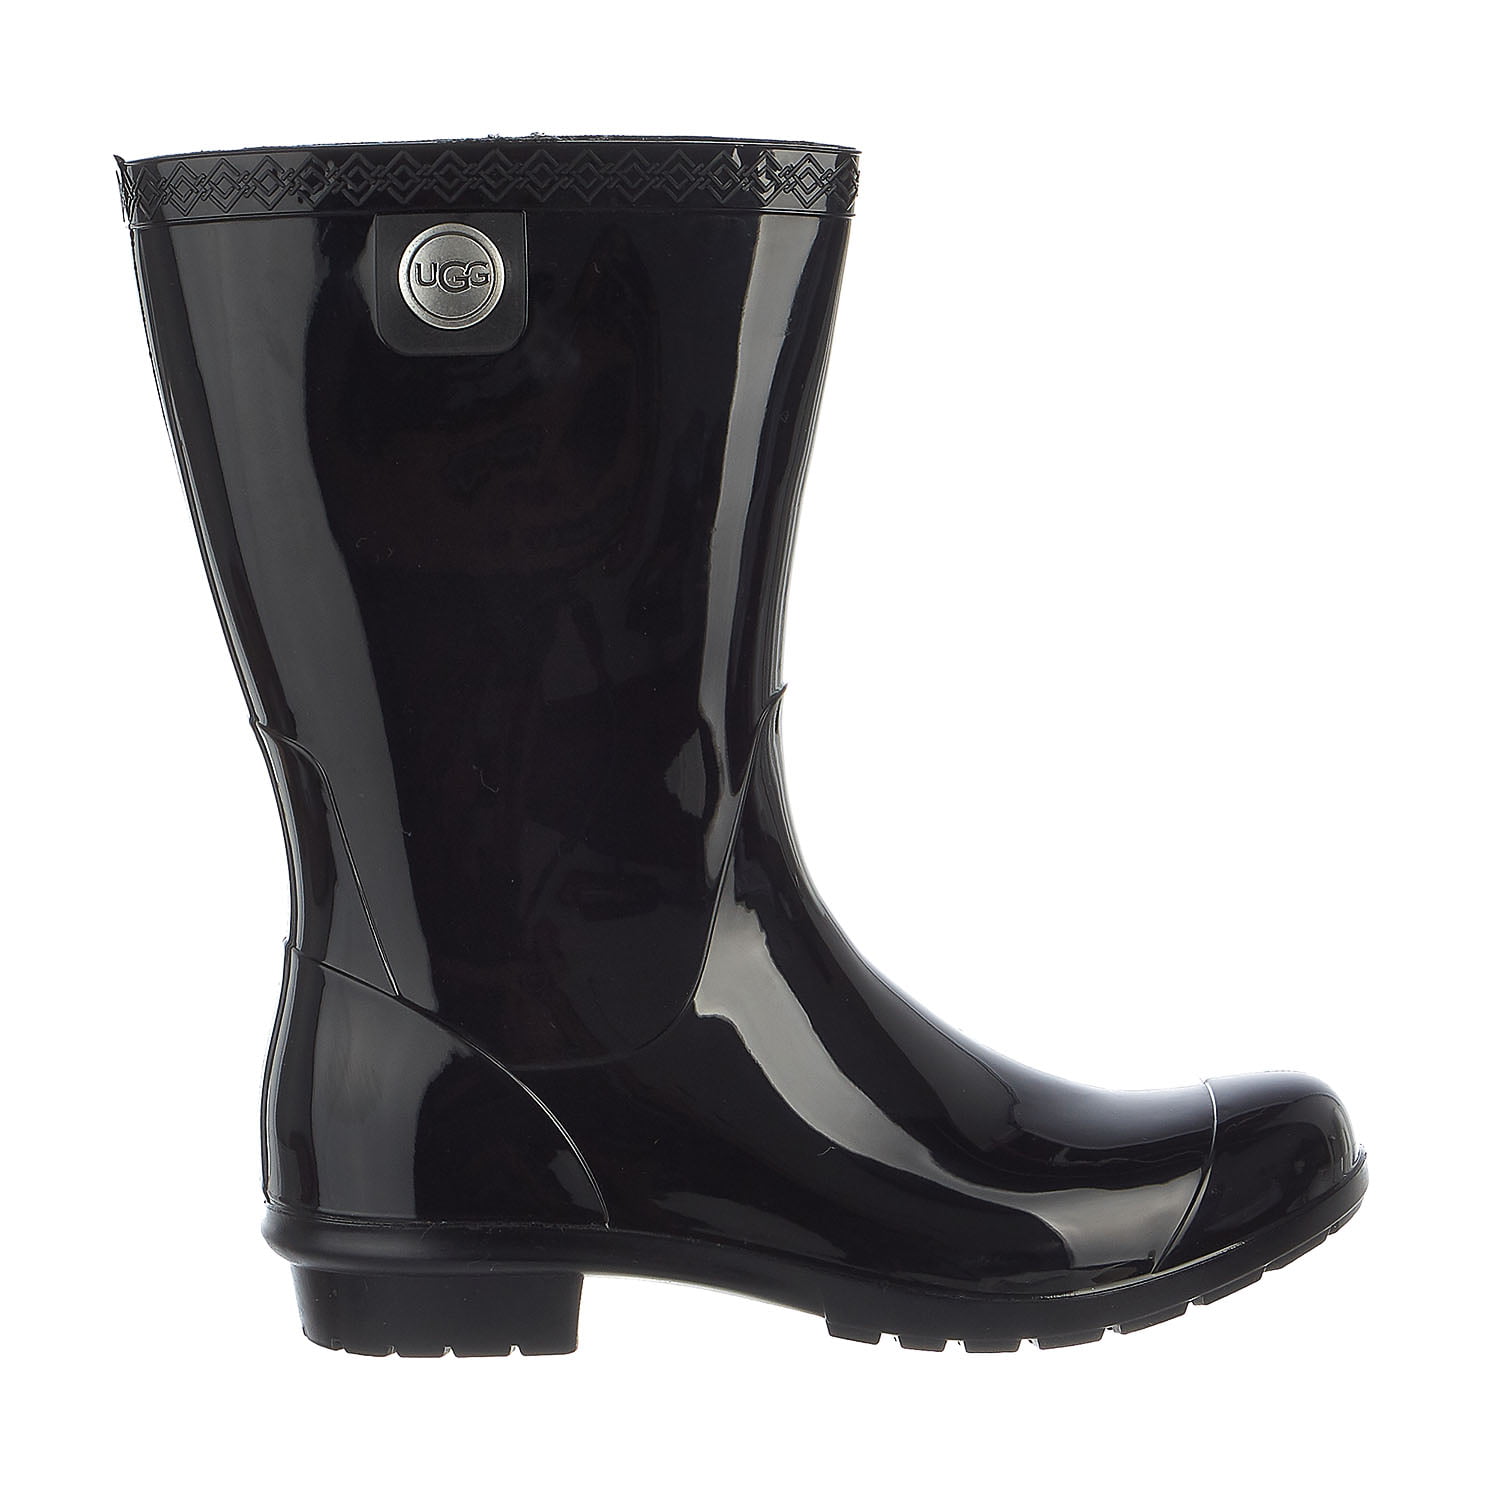 Sienna - Ugg Women's Sienna Black Mid-Calf Rain Boot - 6M - Walmart.com ...